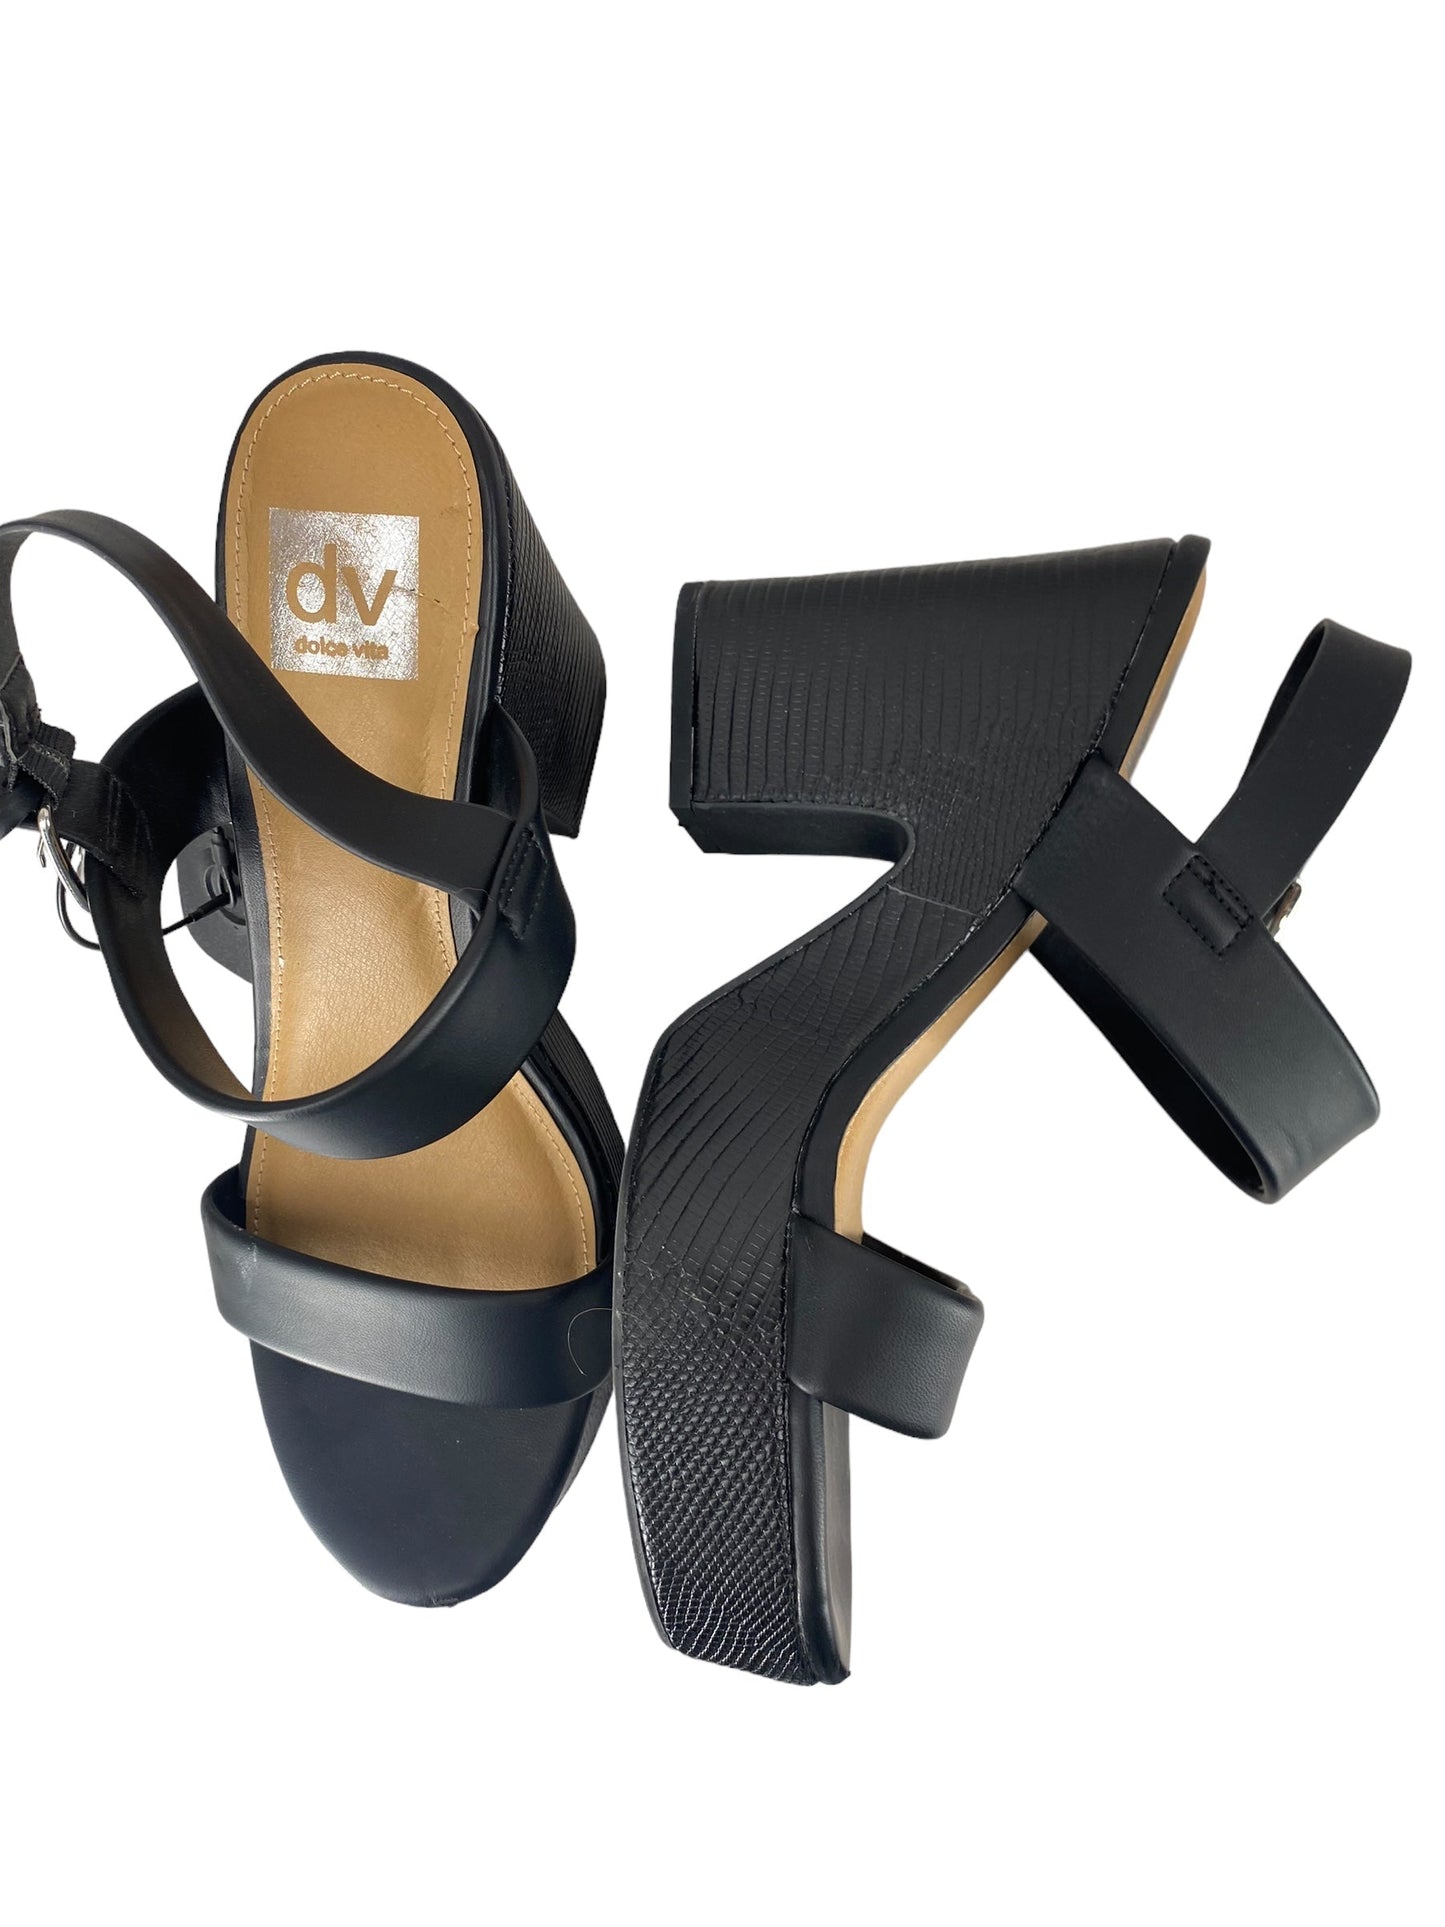 Black Sandals Heels Block Dolce Vita, Size 10